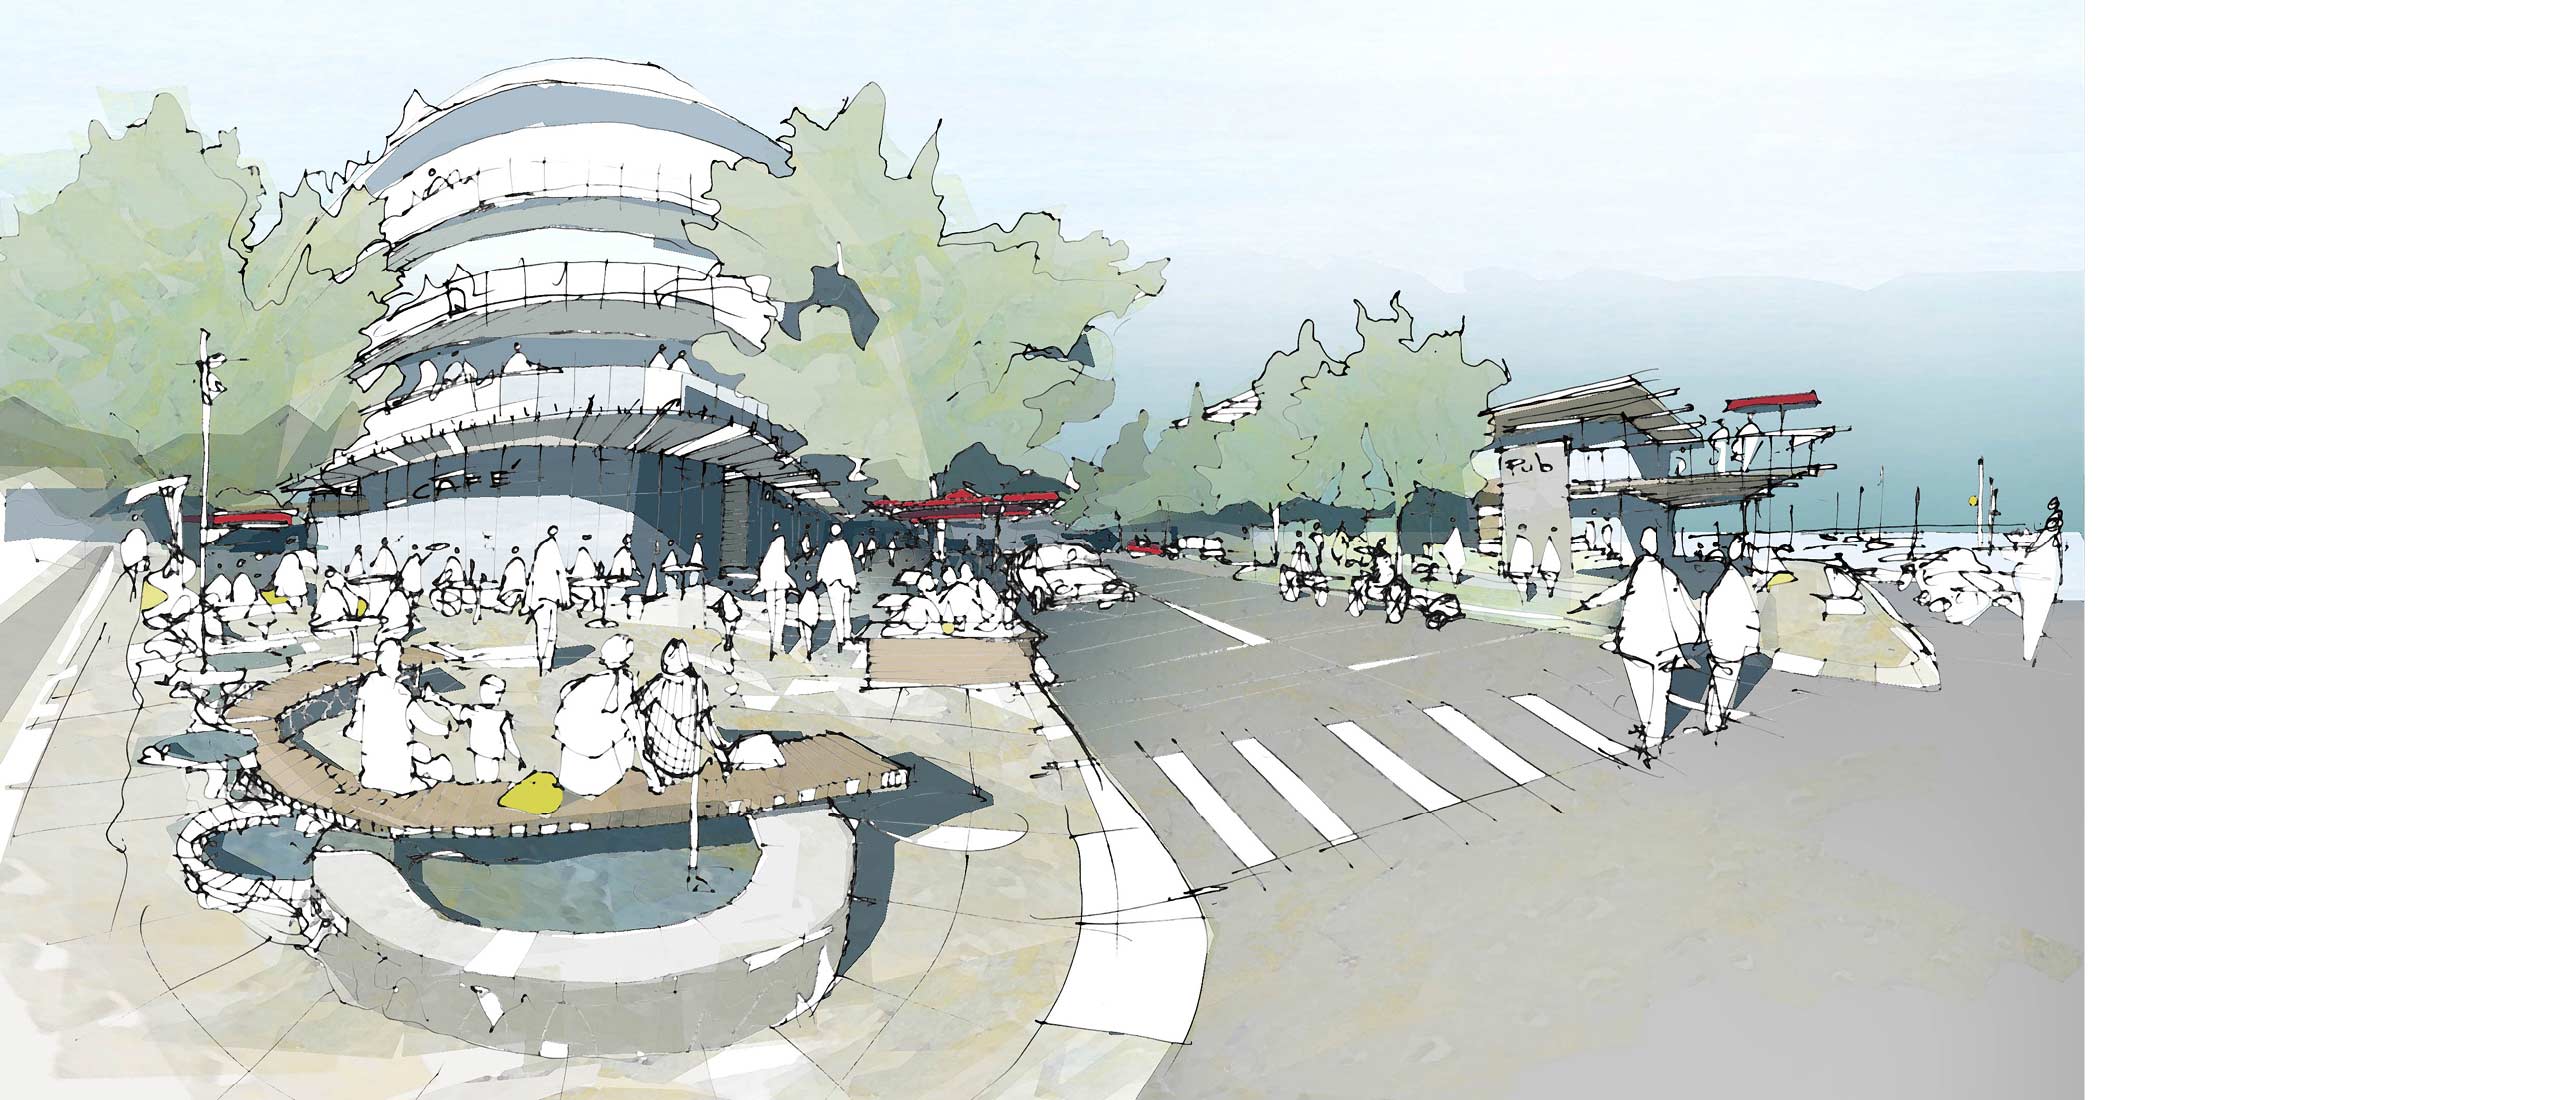 West Bay Waterfront Neighbourhood Design Guidelines © DAU